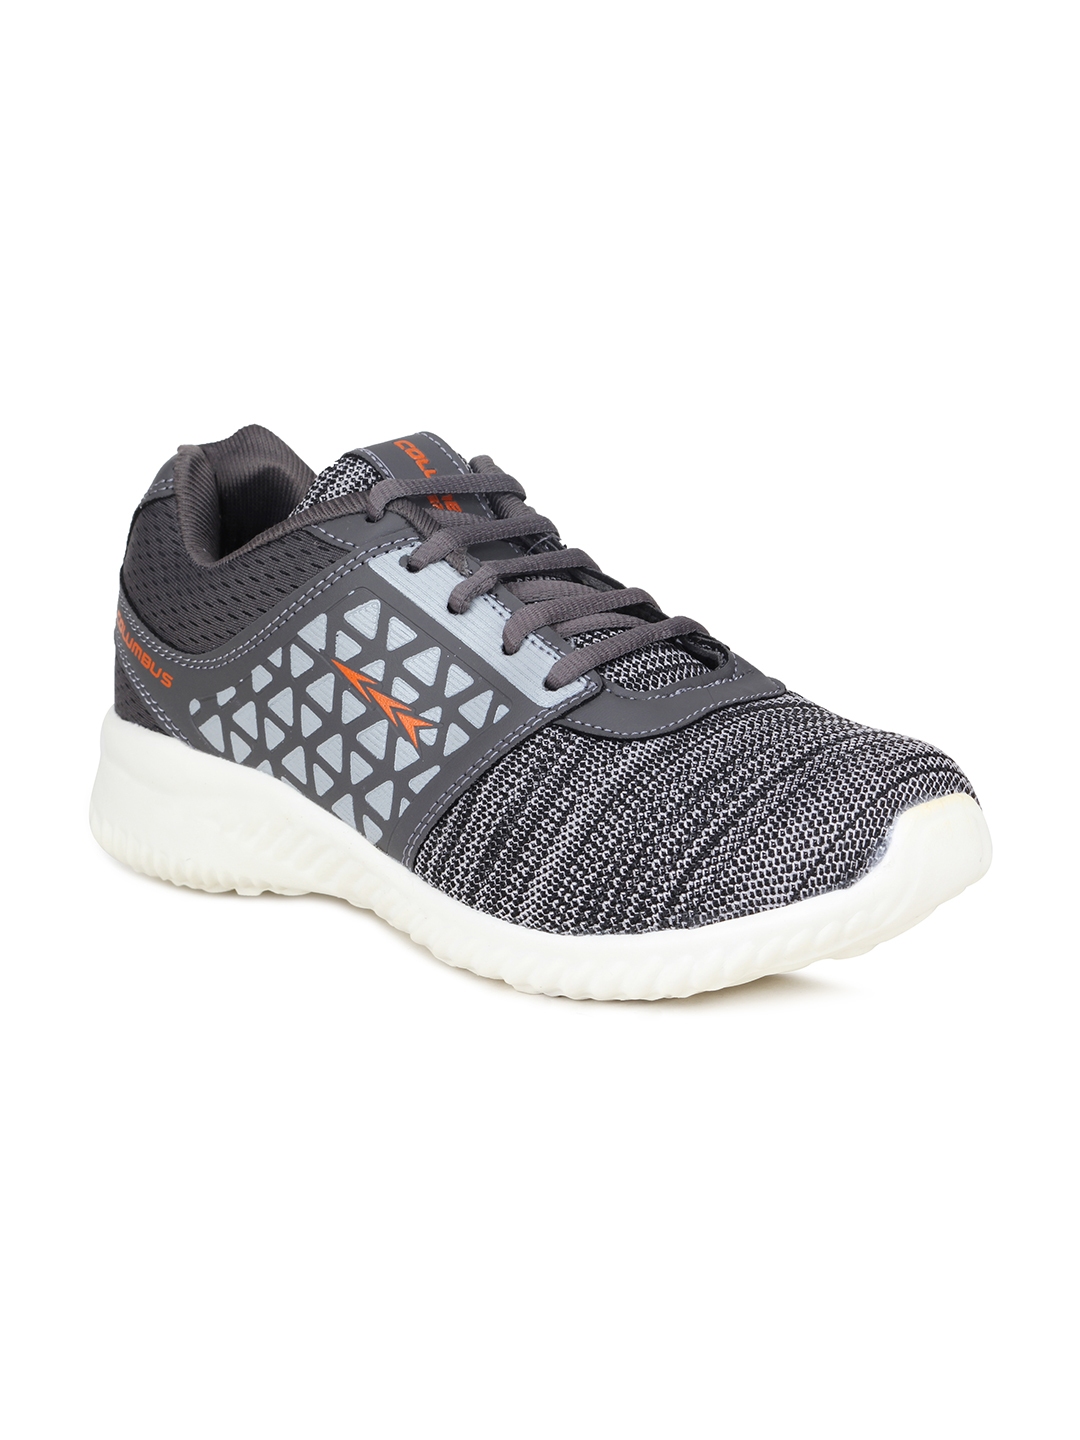 columbus grey running shoes